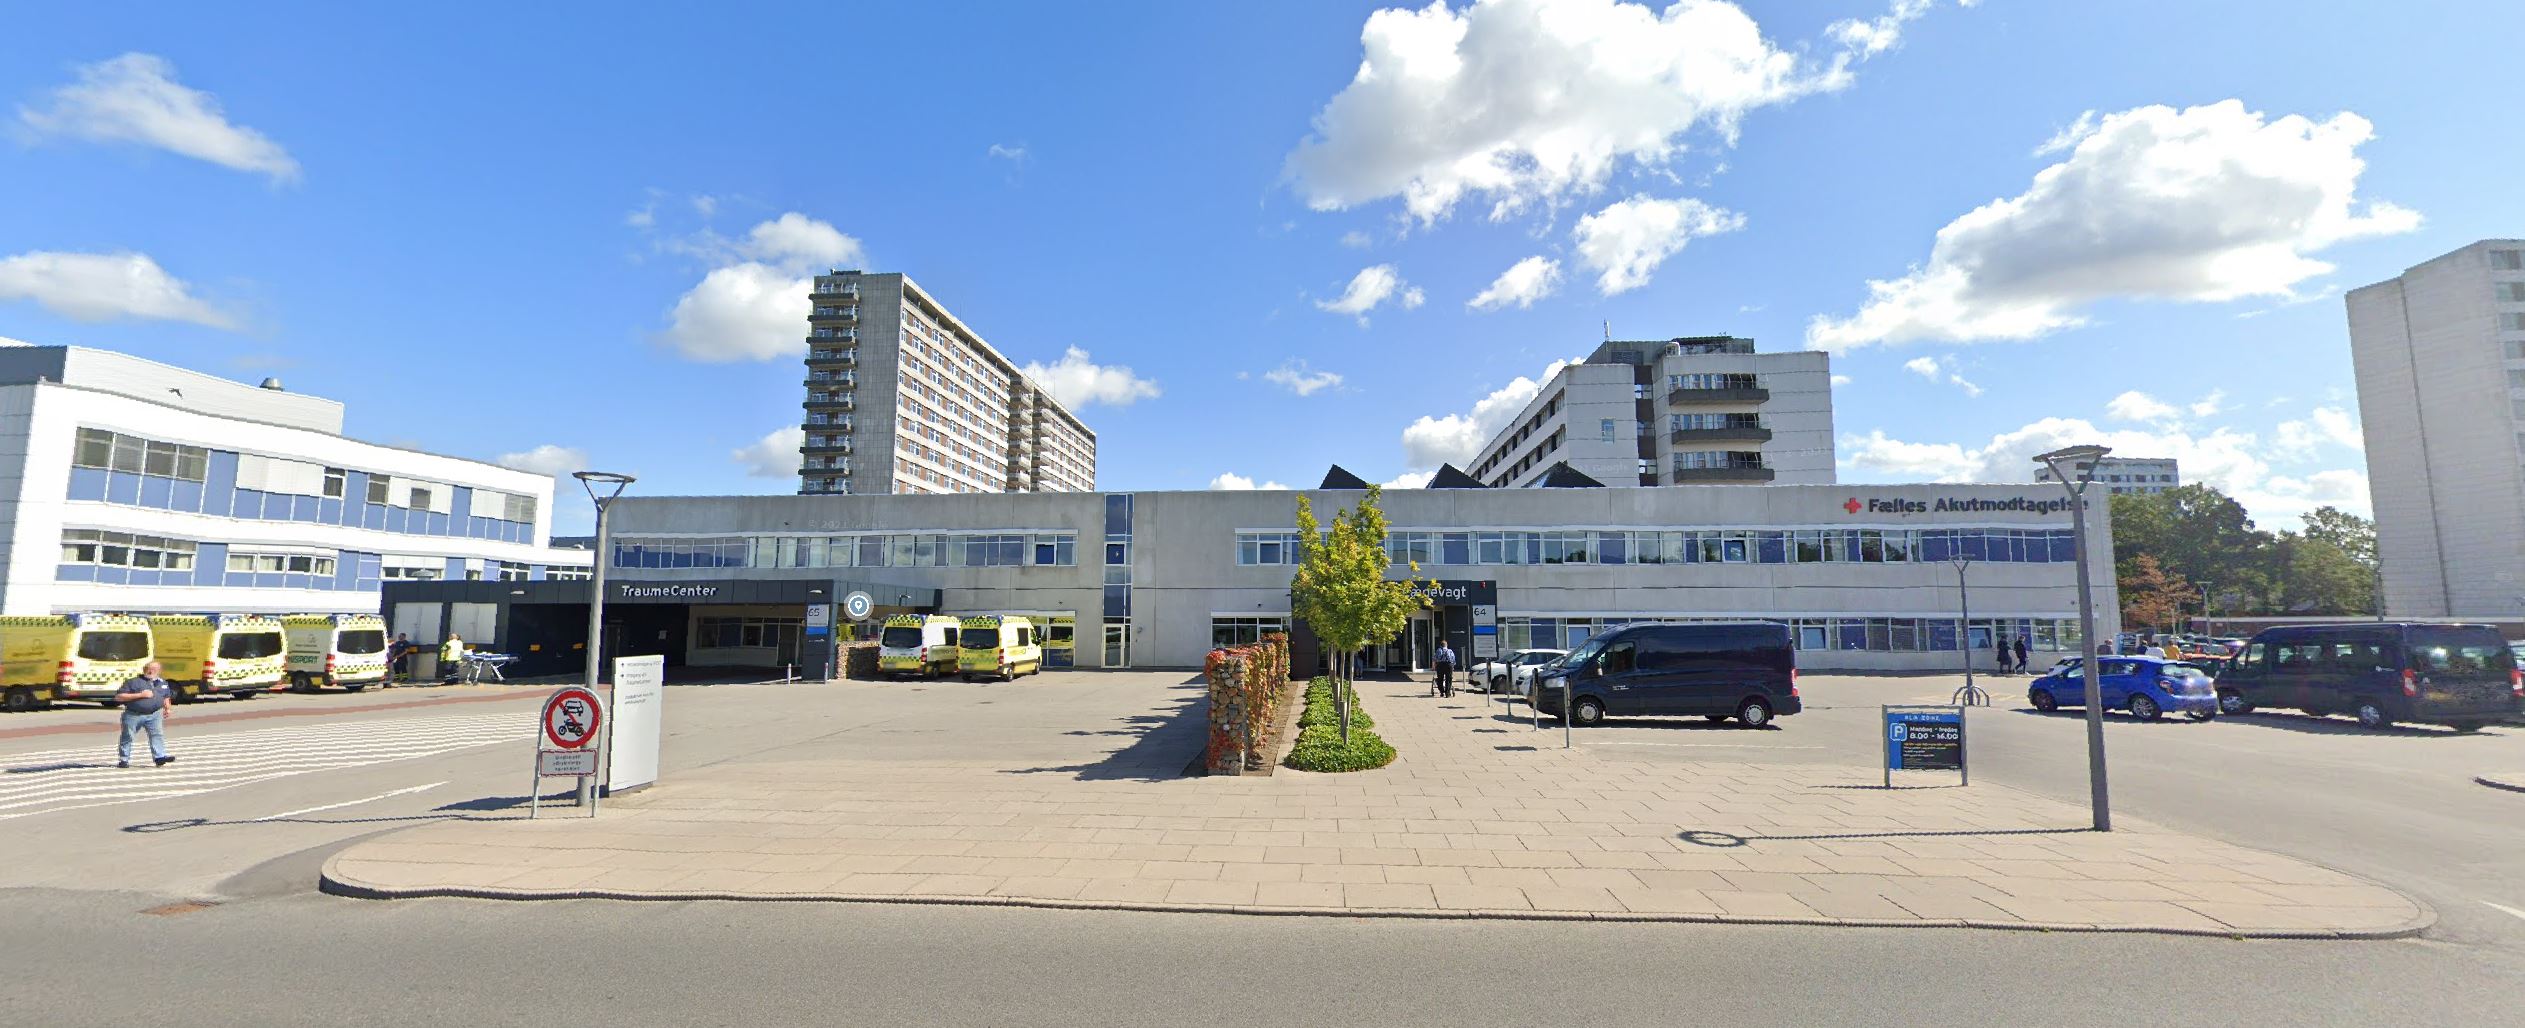 Odense University Hospital - Trauma Center